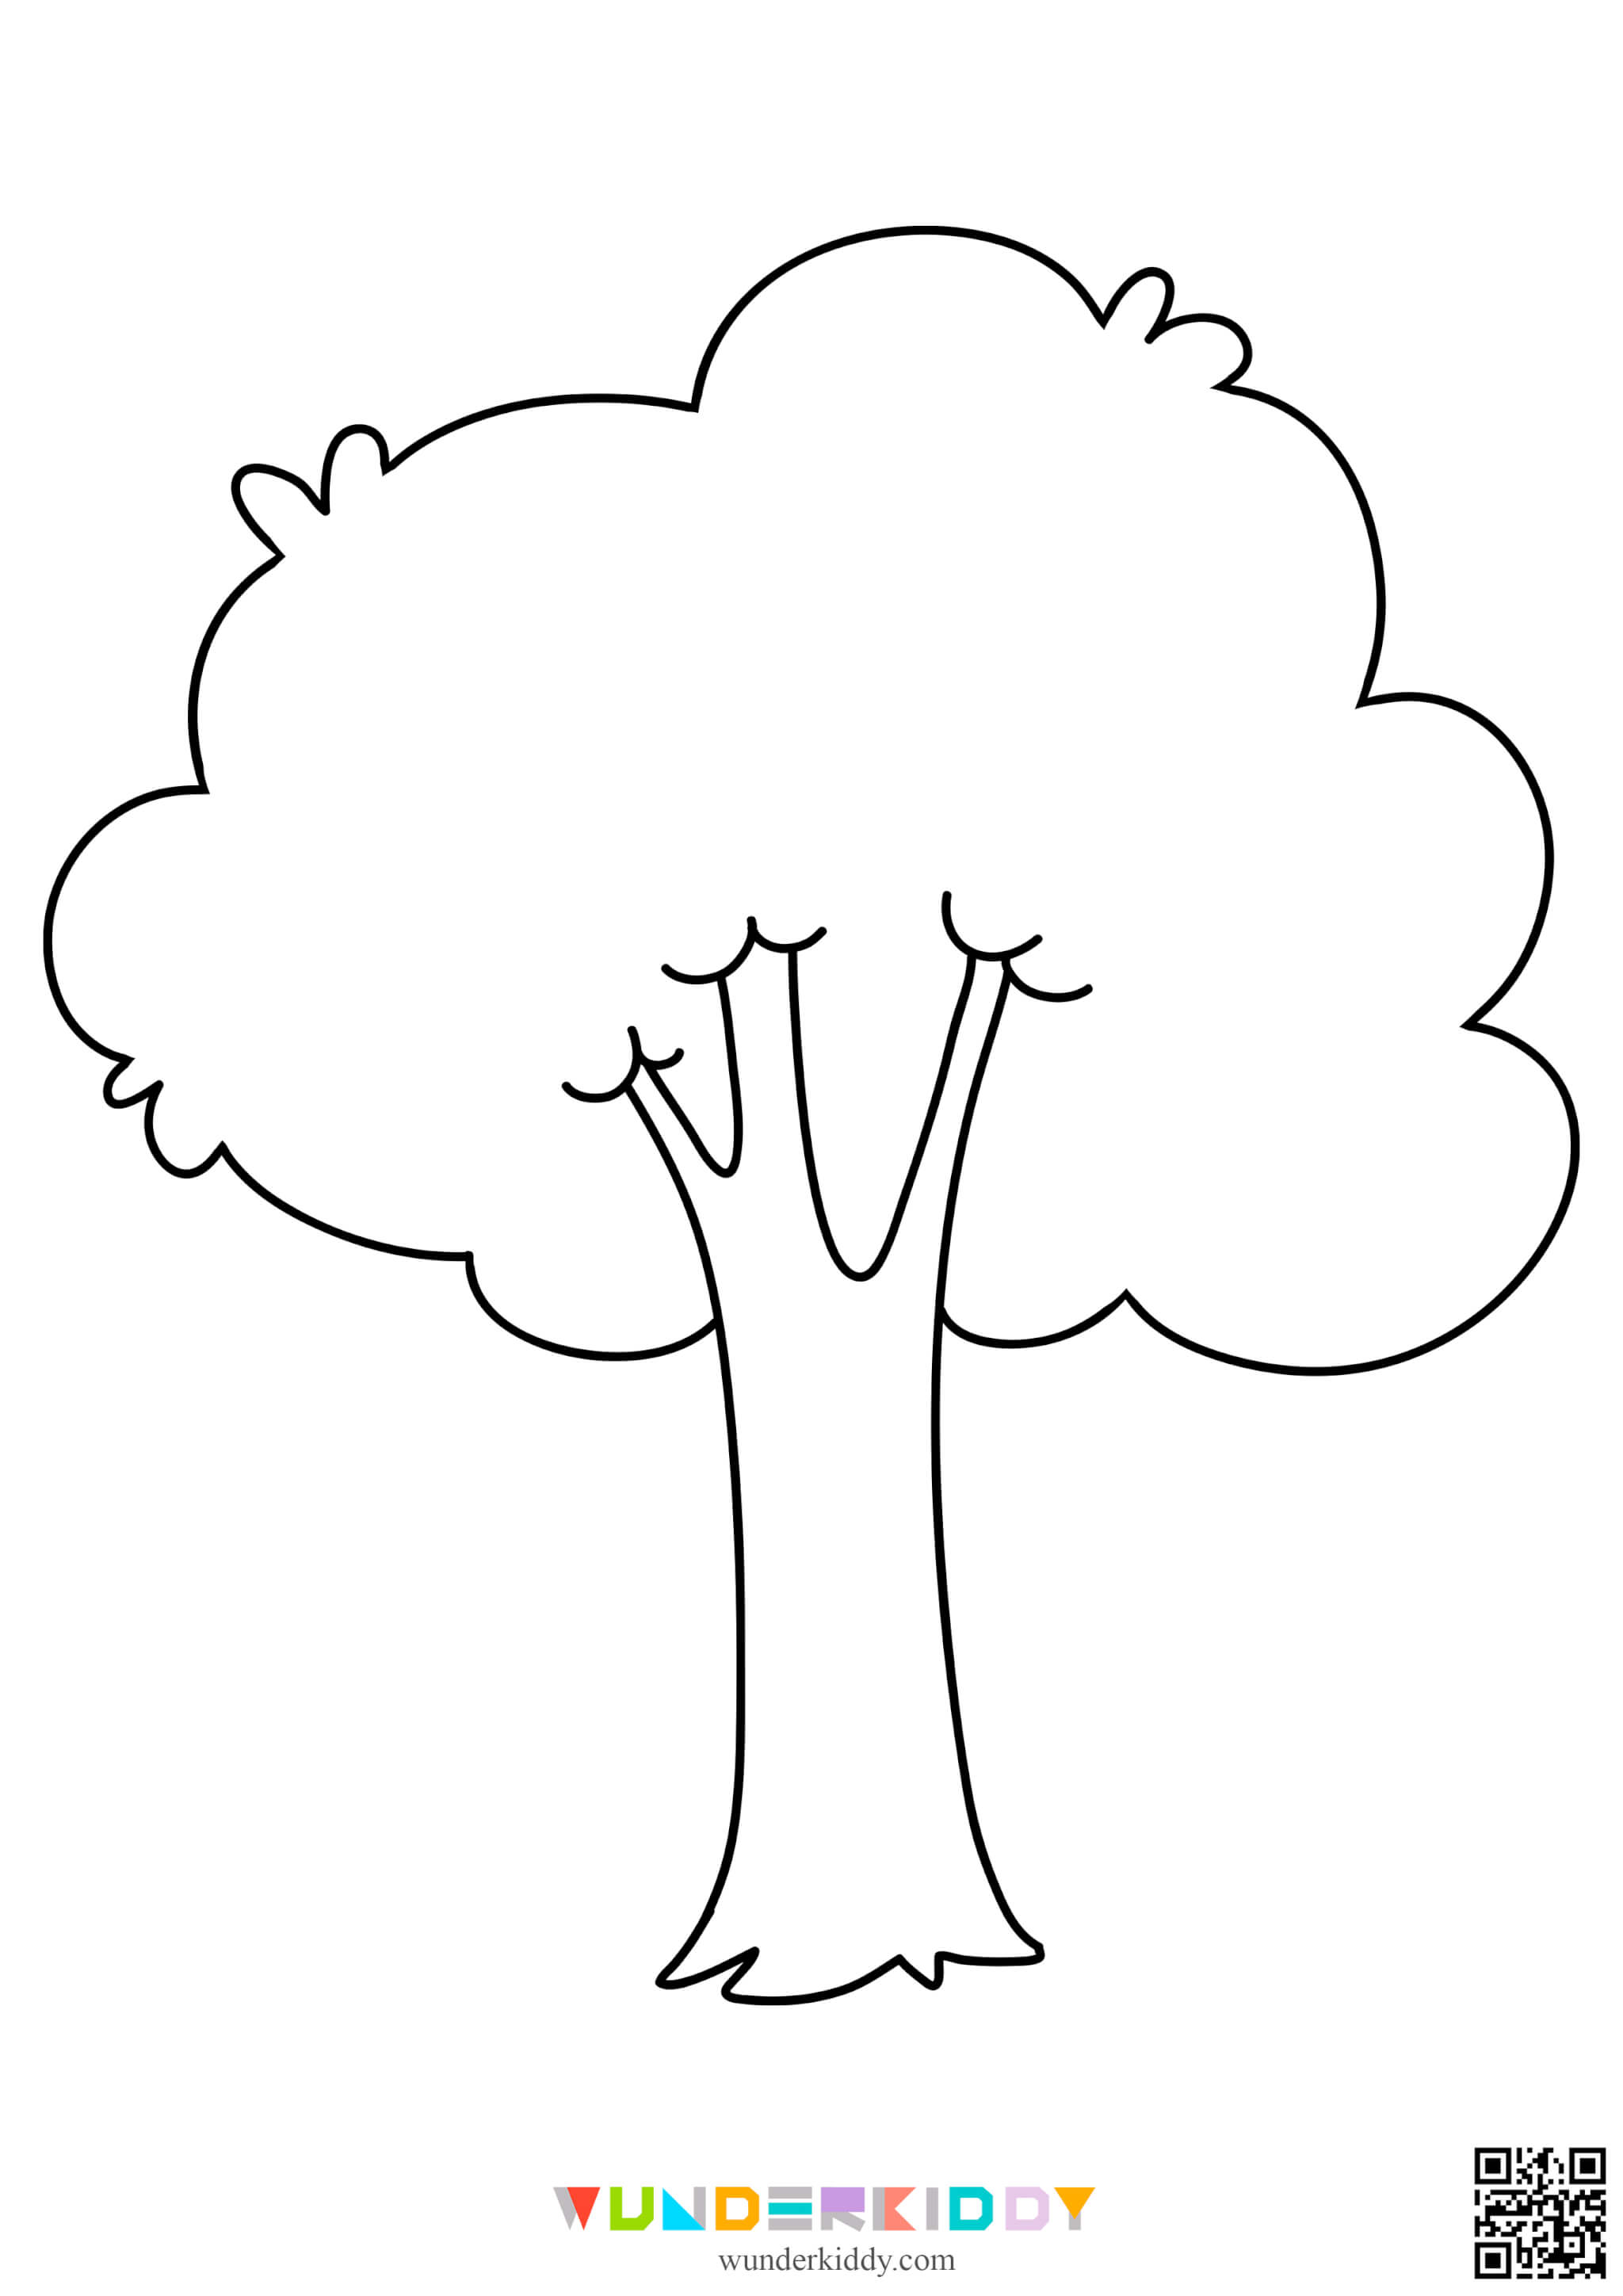 Free Tree Template - Image 6